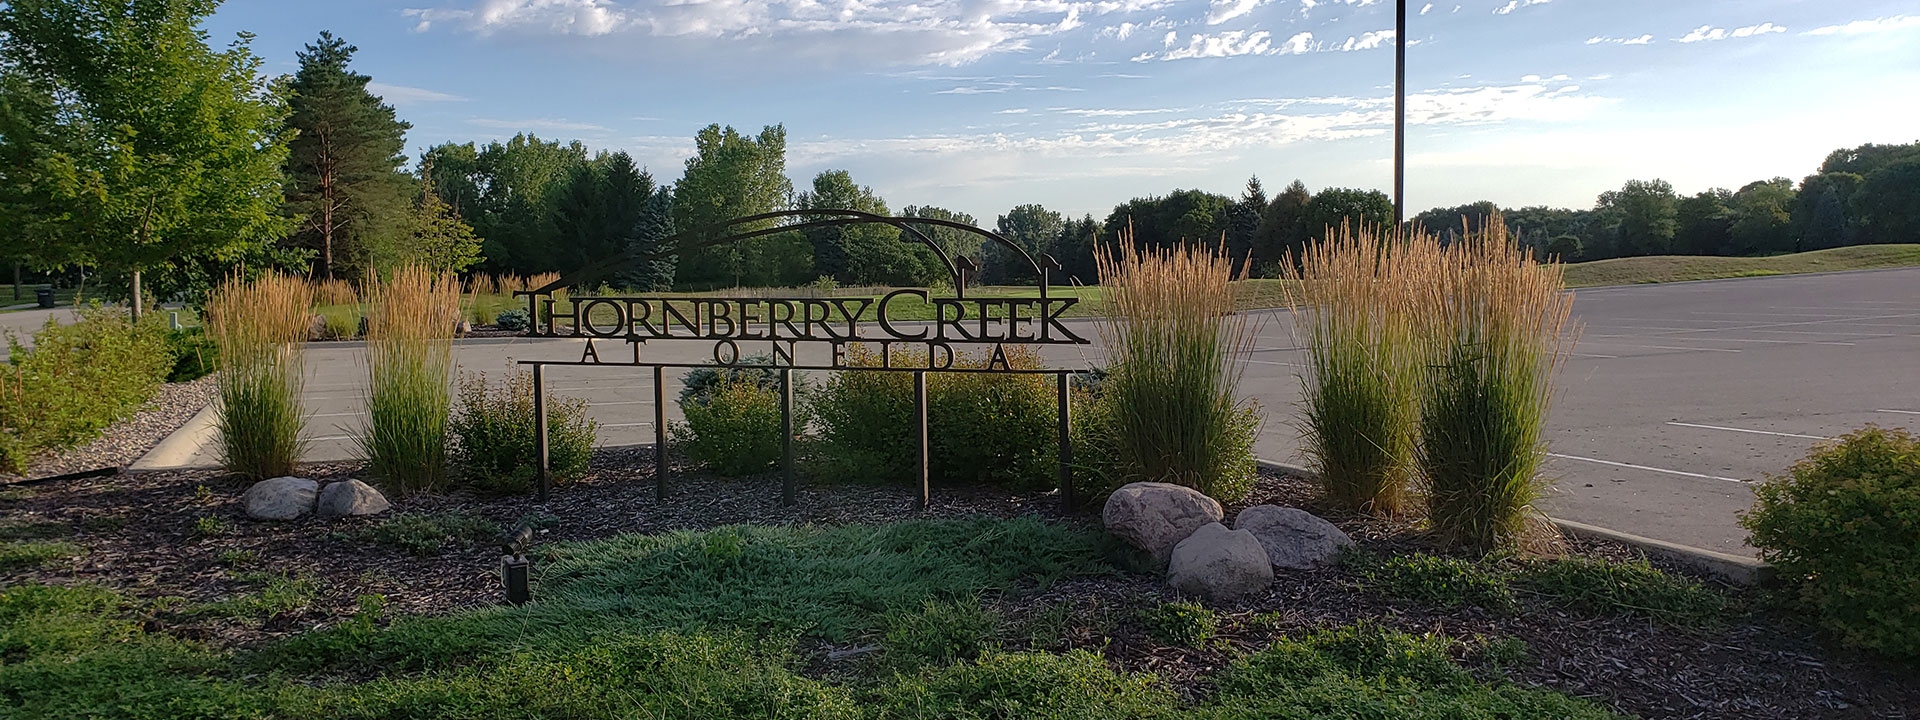 Thornberry Creek at Oneida sign